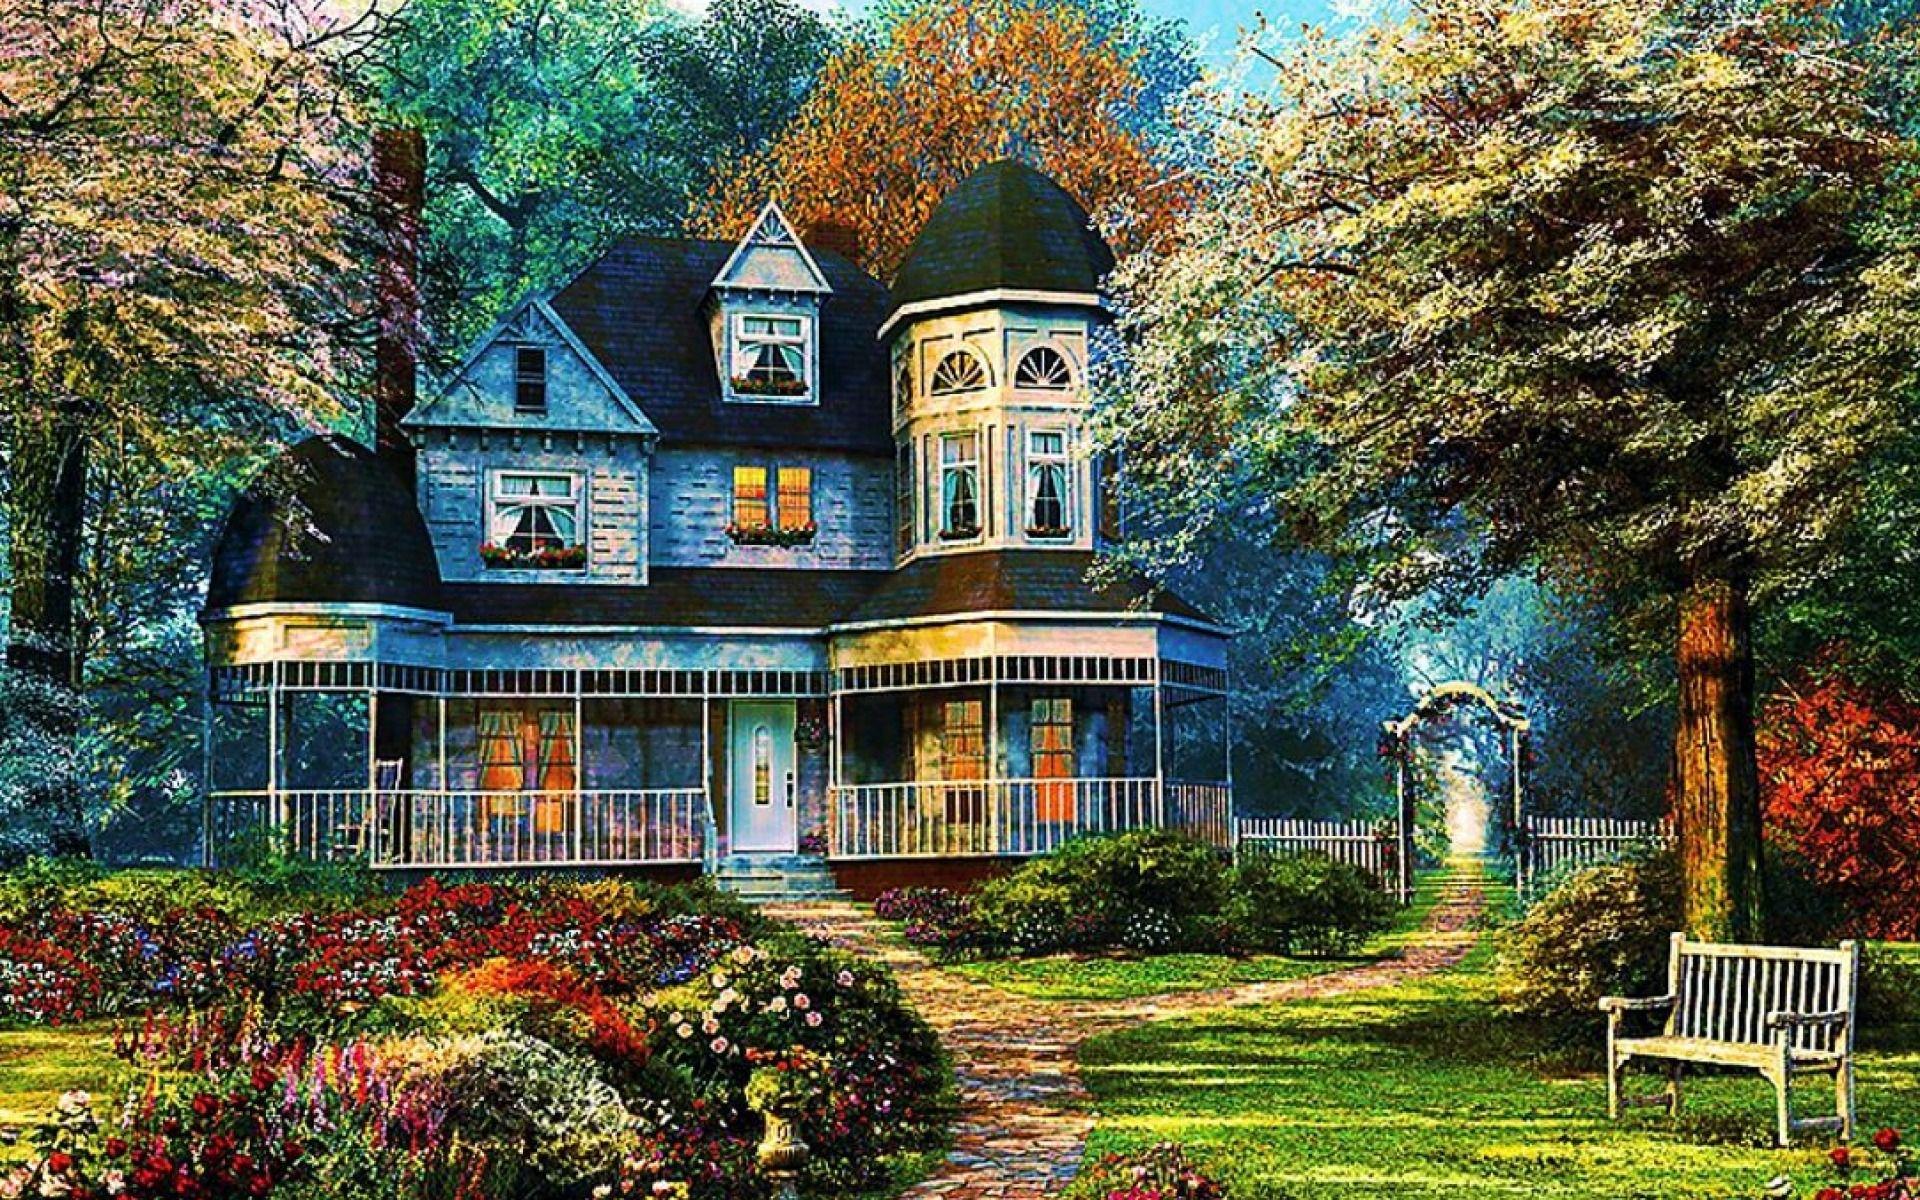 Home Landscape Wallpapers - Top Free Home Landscape Backgrounds